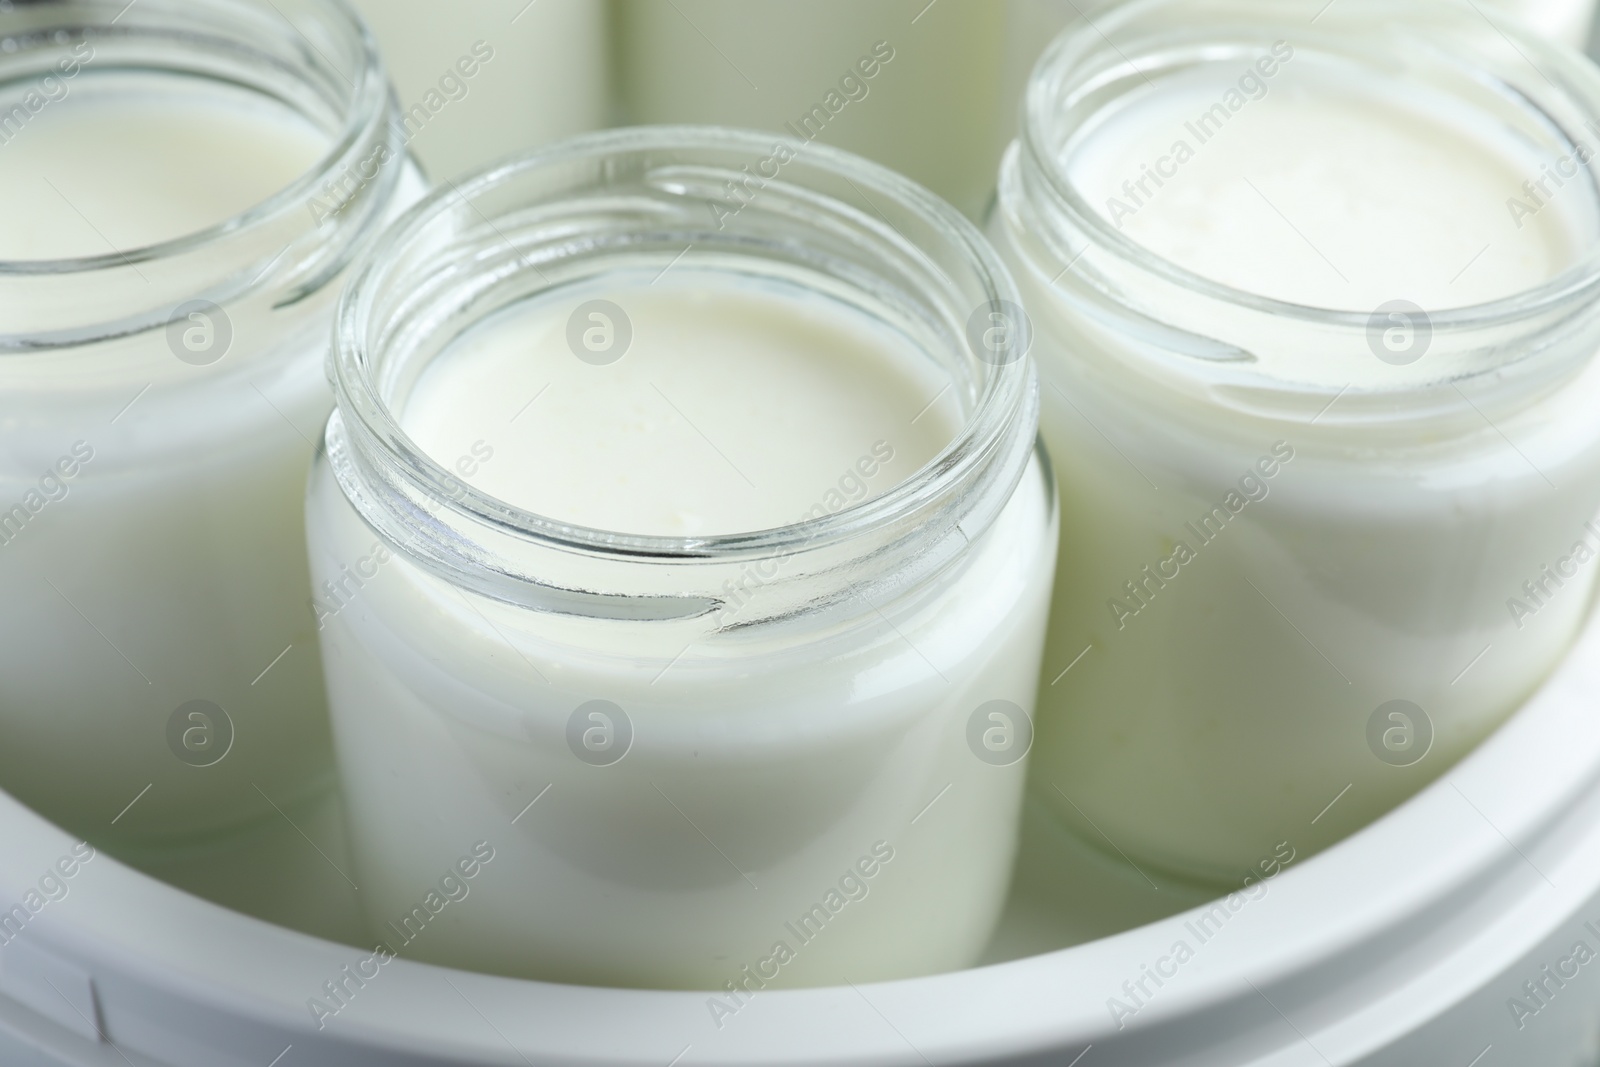 Photo of Modern yogurt maker with full jars, closeup